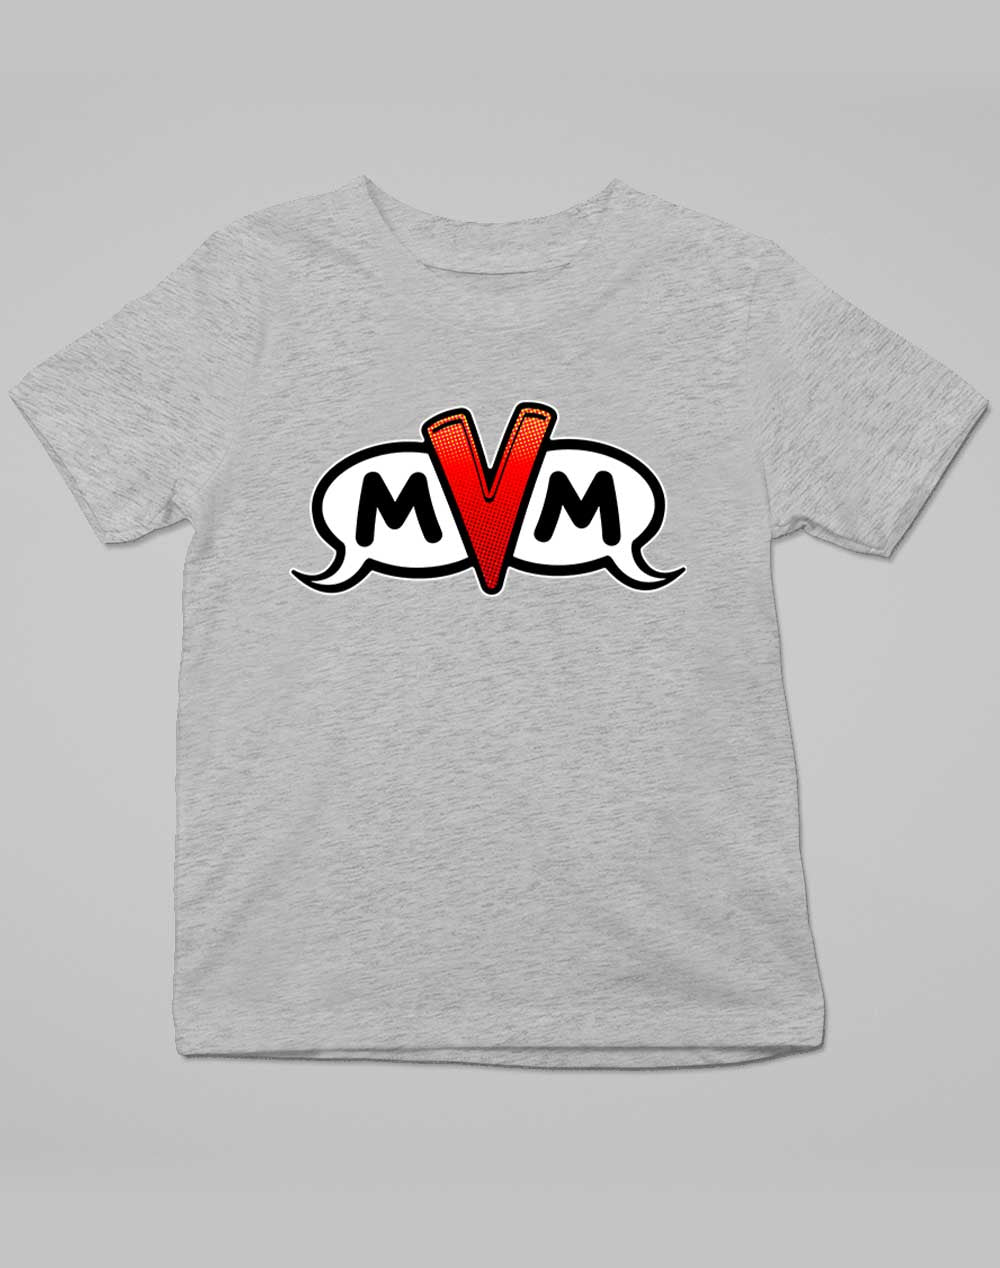 Grey Marl - MvM Logo Kids T-Shirt